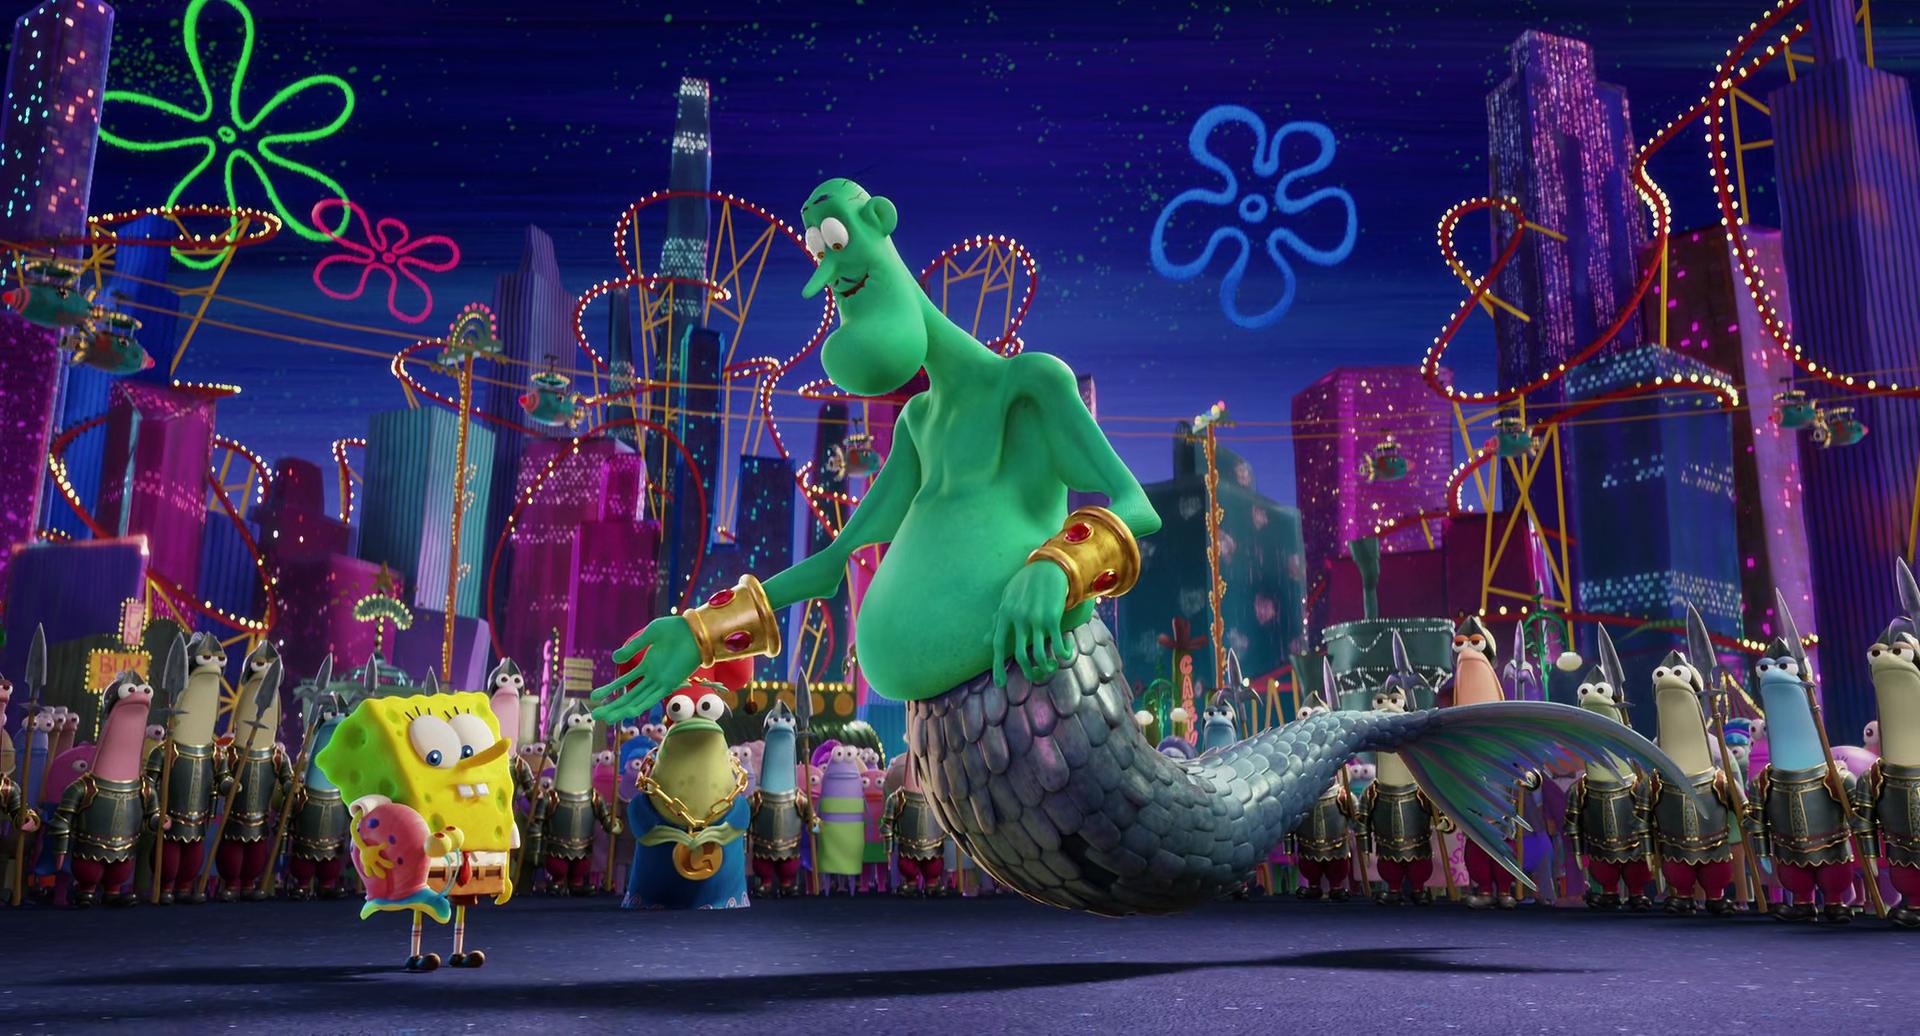 A scene from The SpongeBob Movie: Sponge on the Run